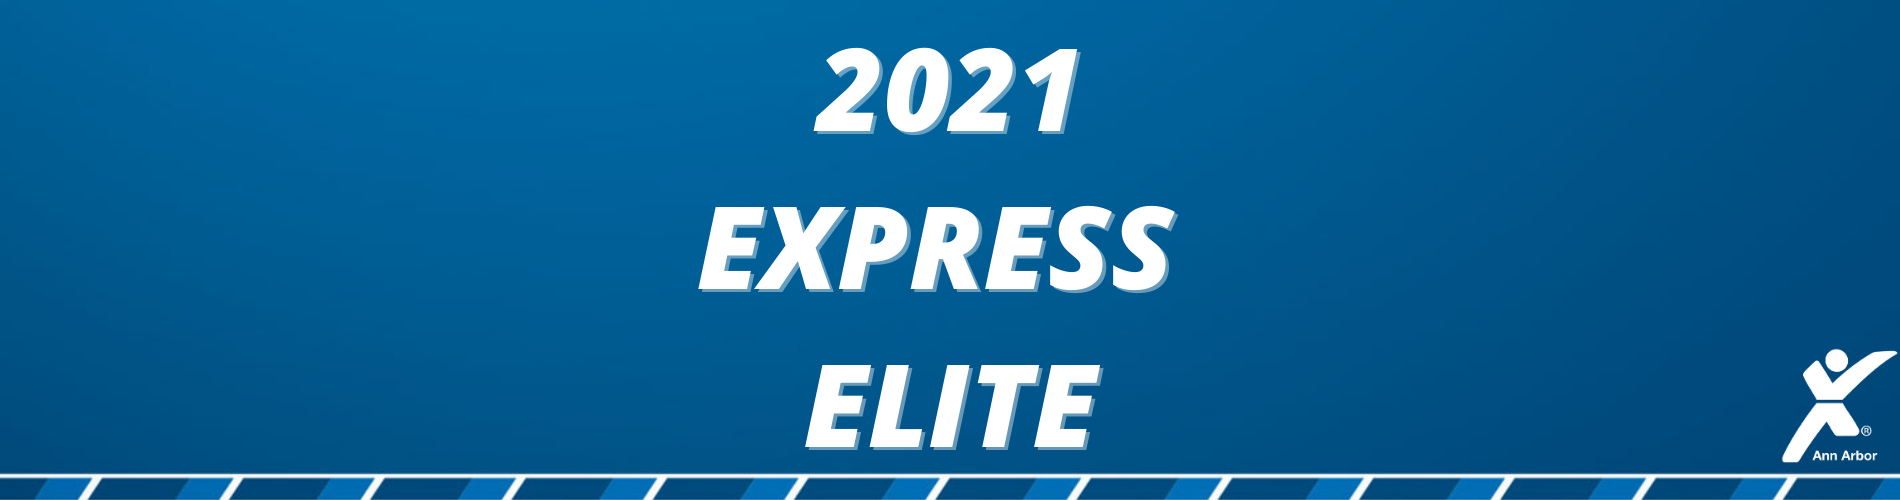 Express Elite Banner